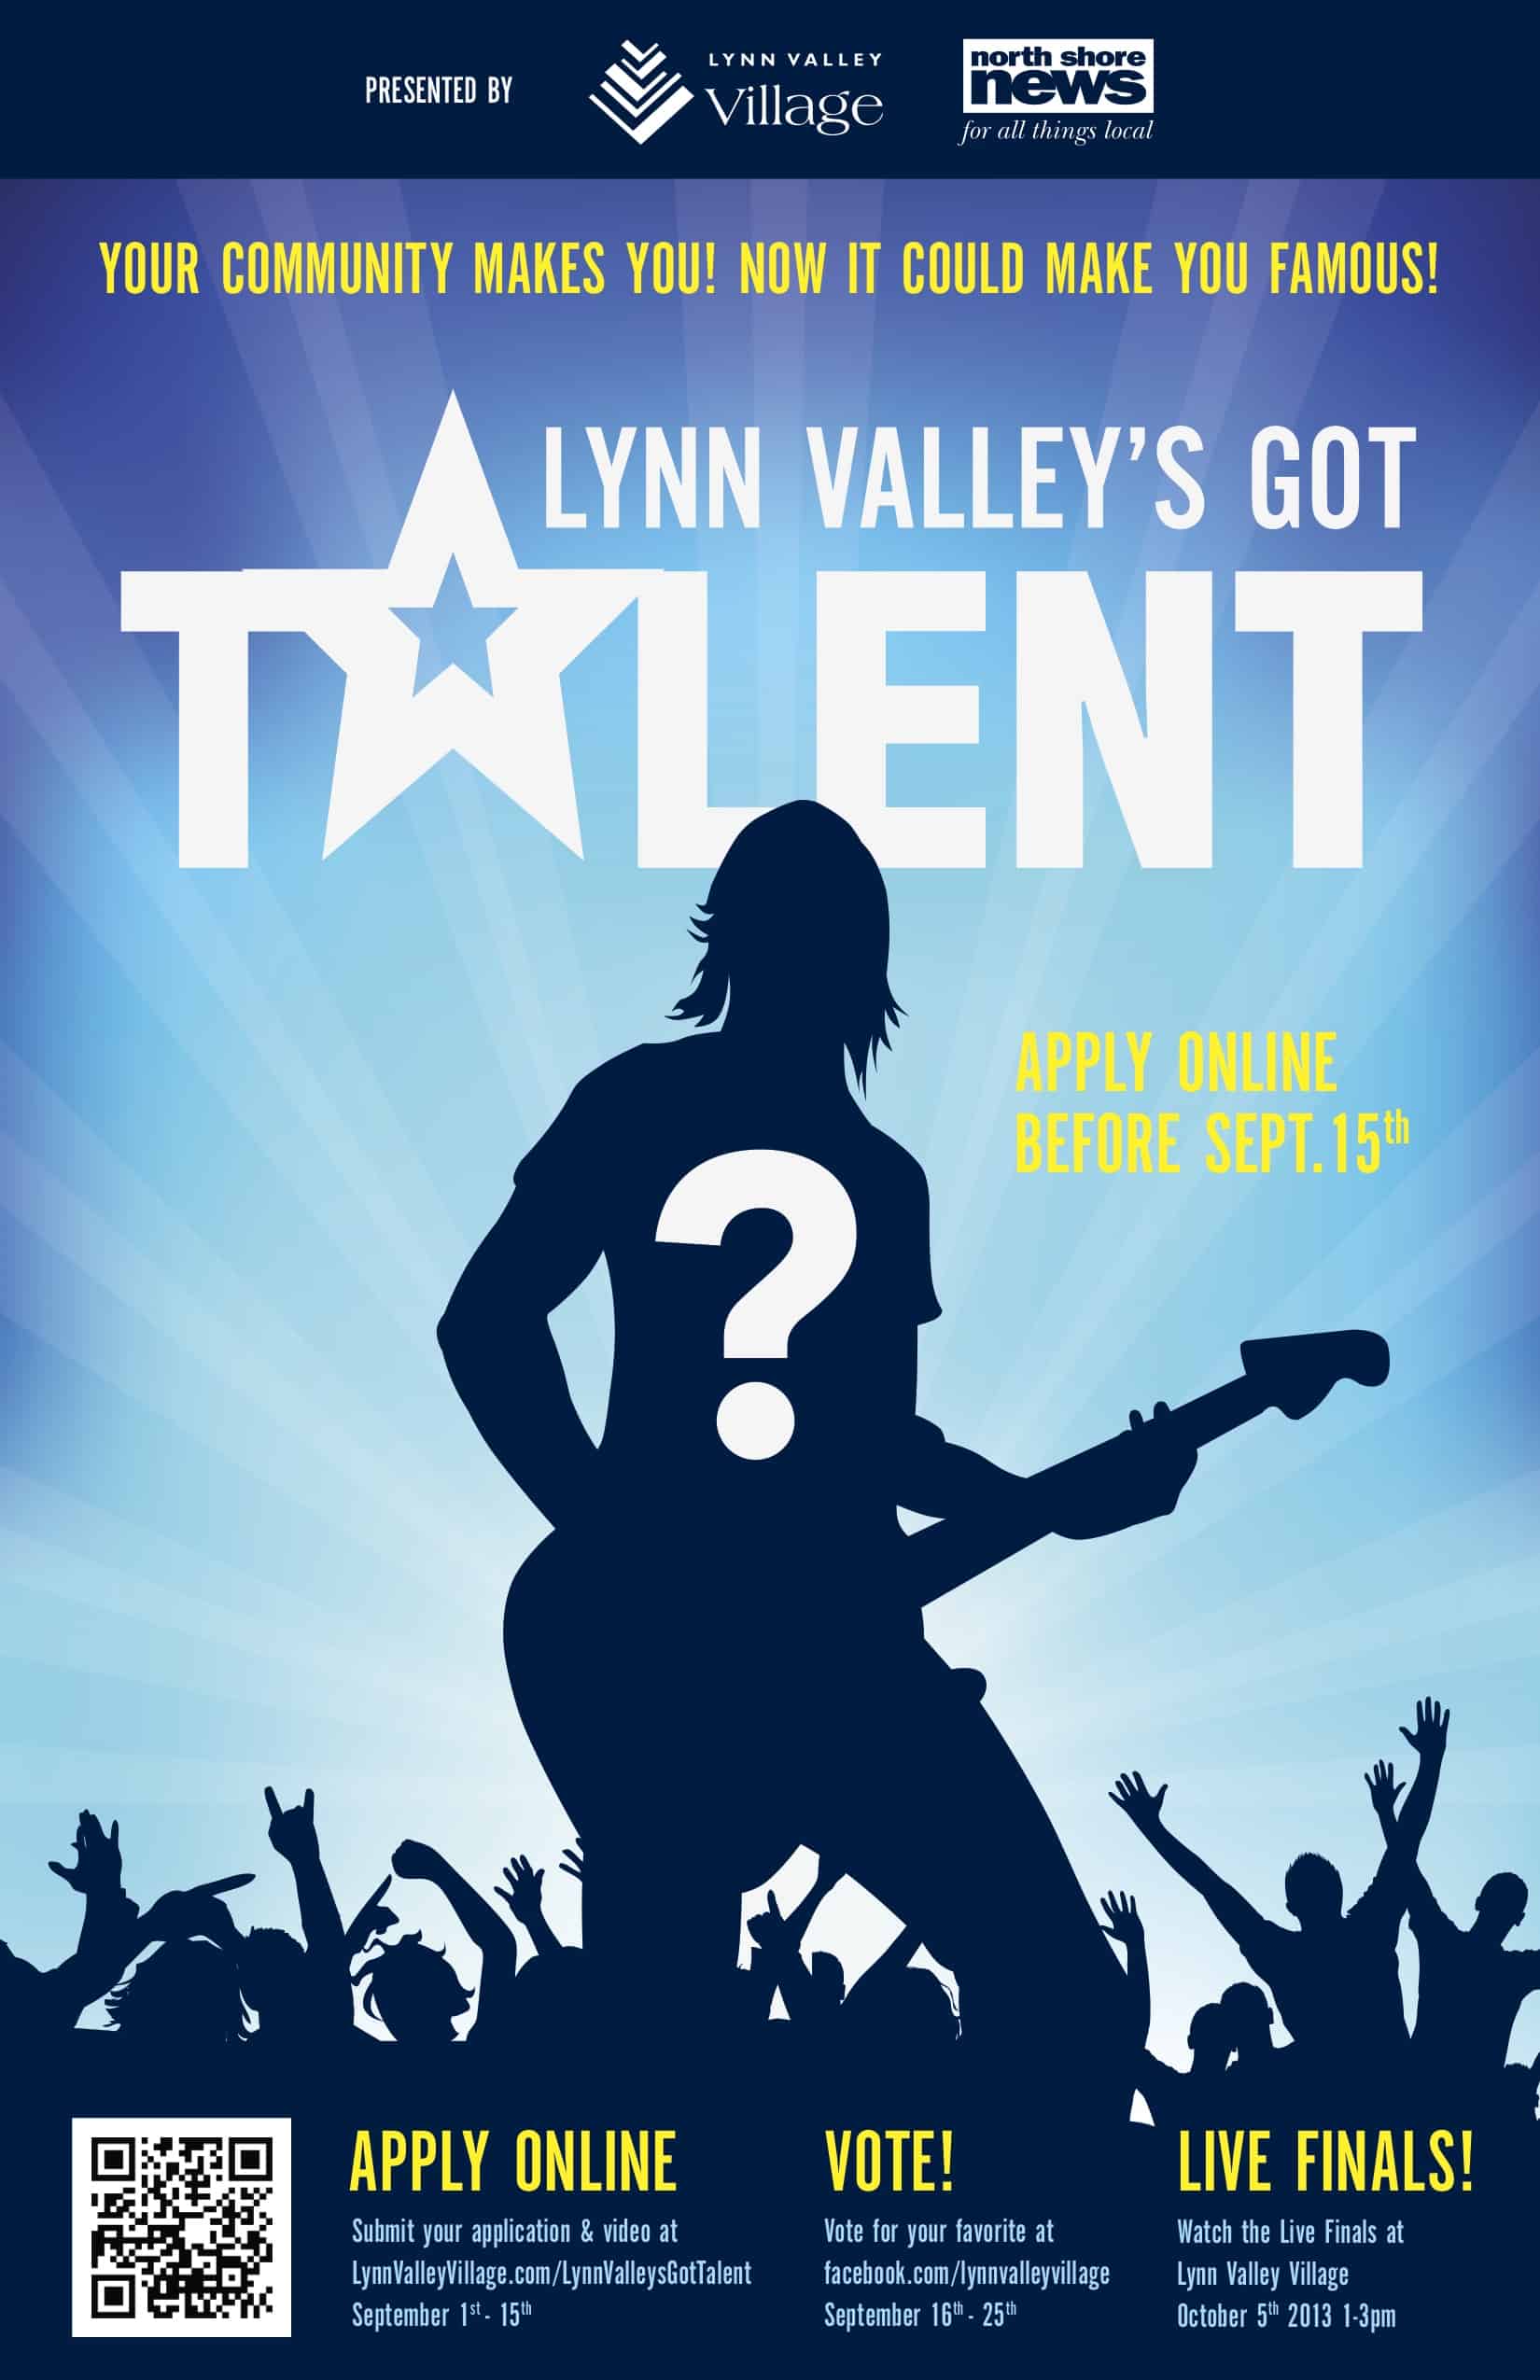 Have you got talent, Lynn Valley??